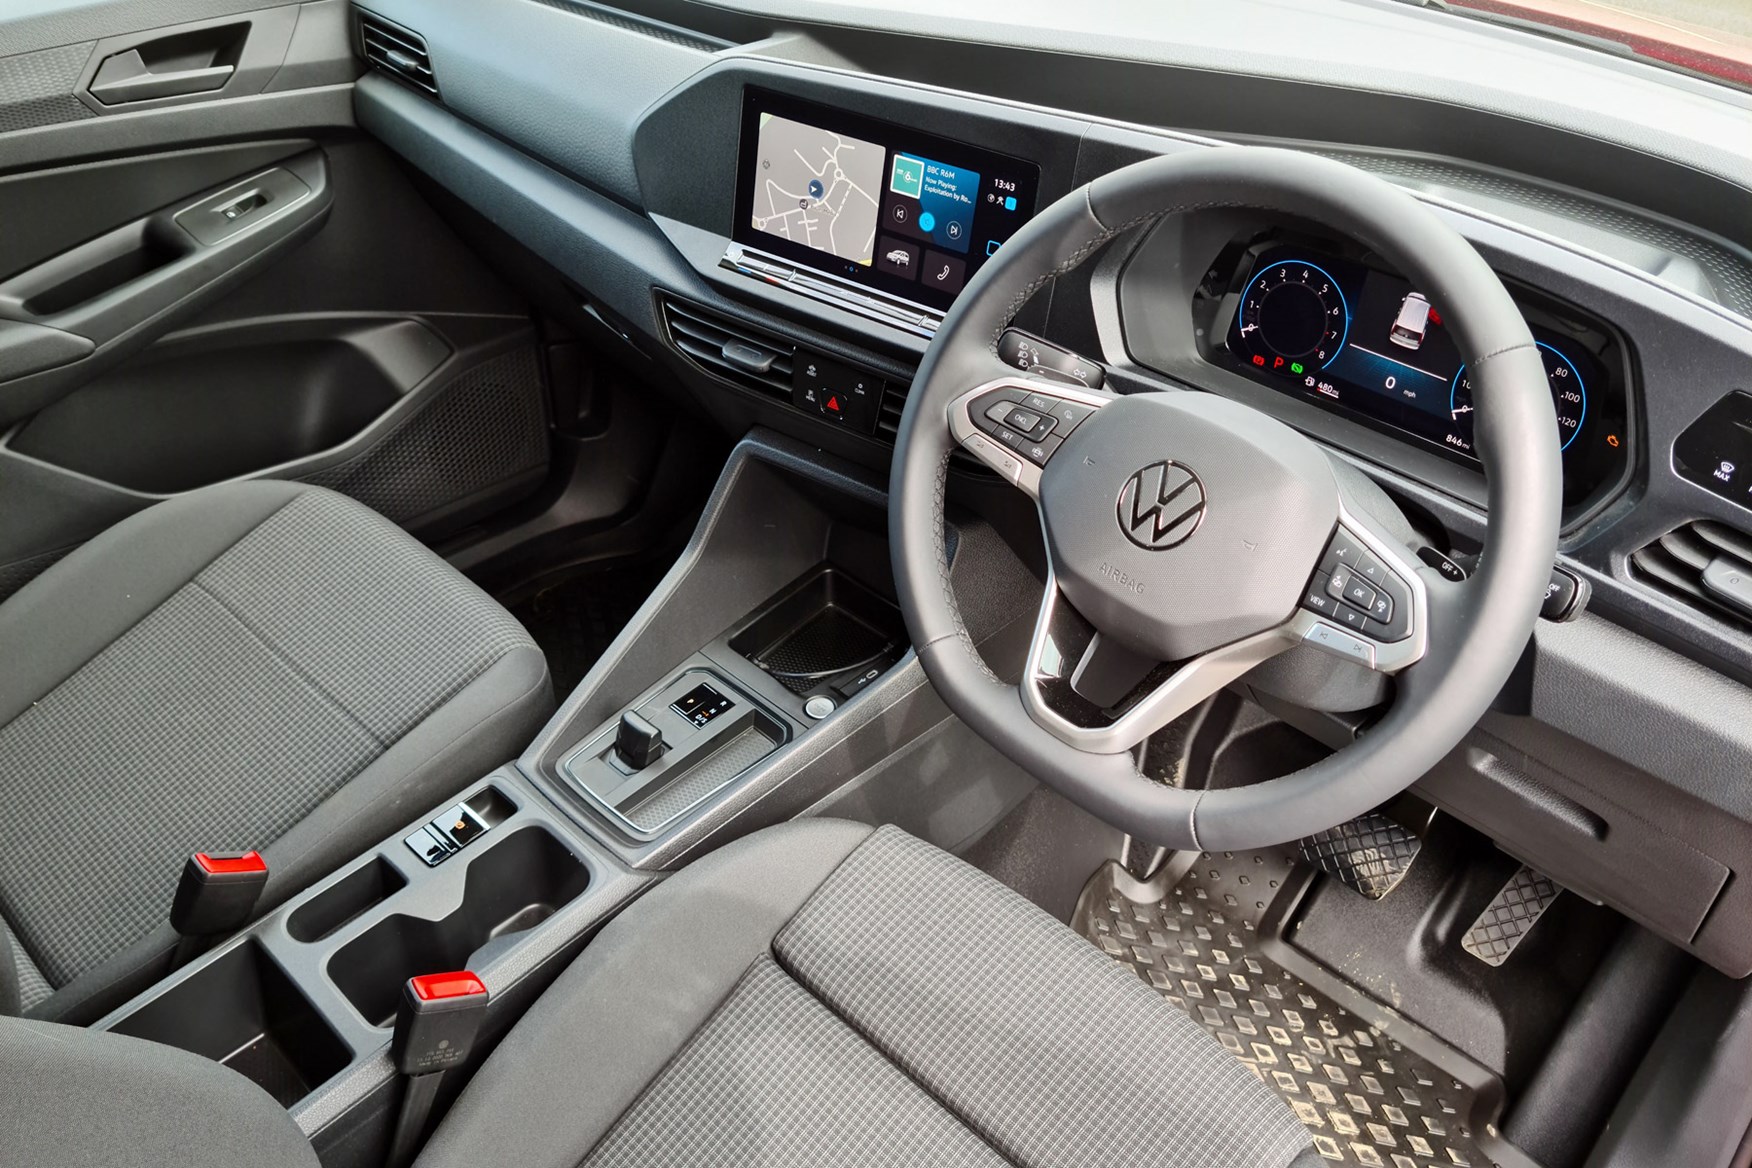 Volkswagen Caddy Cargo 1.5 TSI petrol review - cab interior,  dashboard, steering wheel